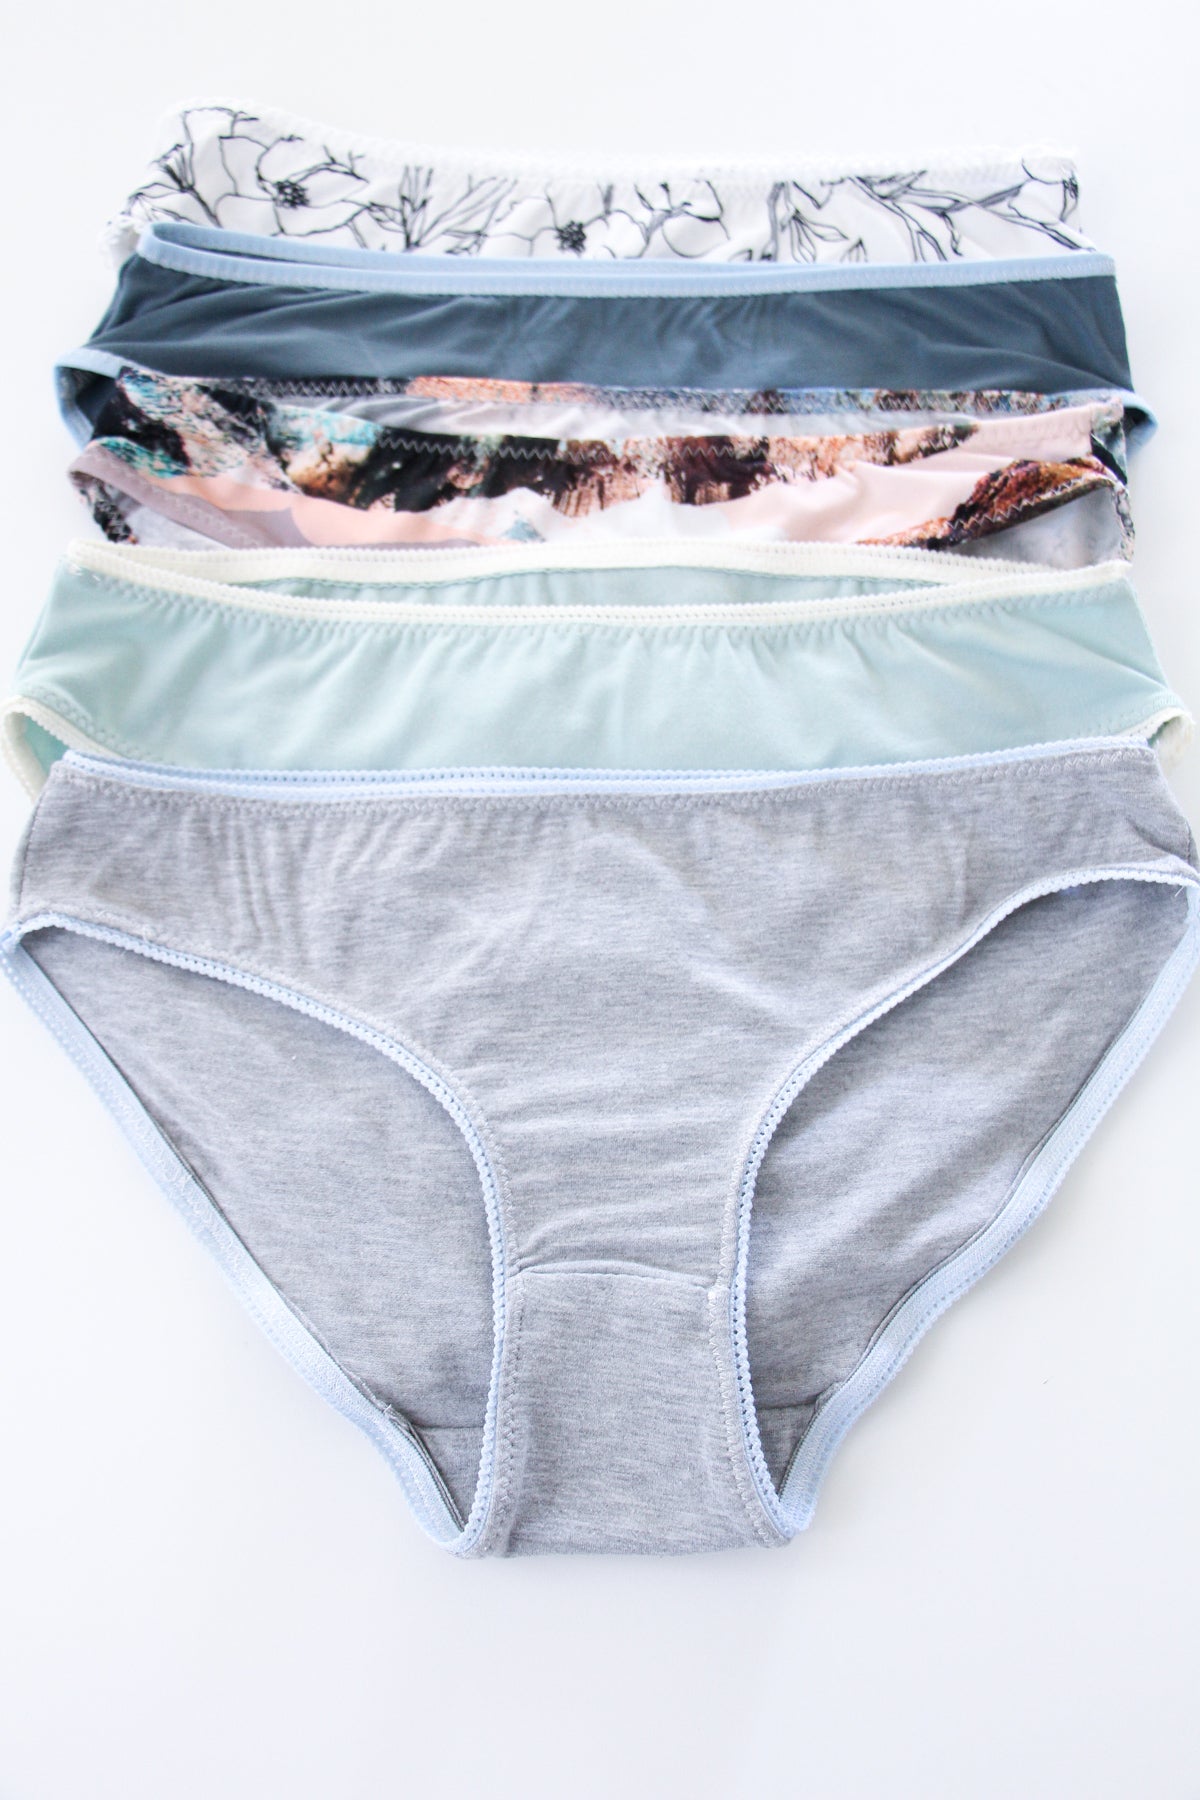 Acacia underwear - Megan Nielsen